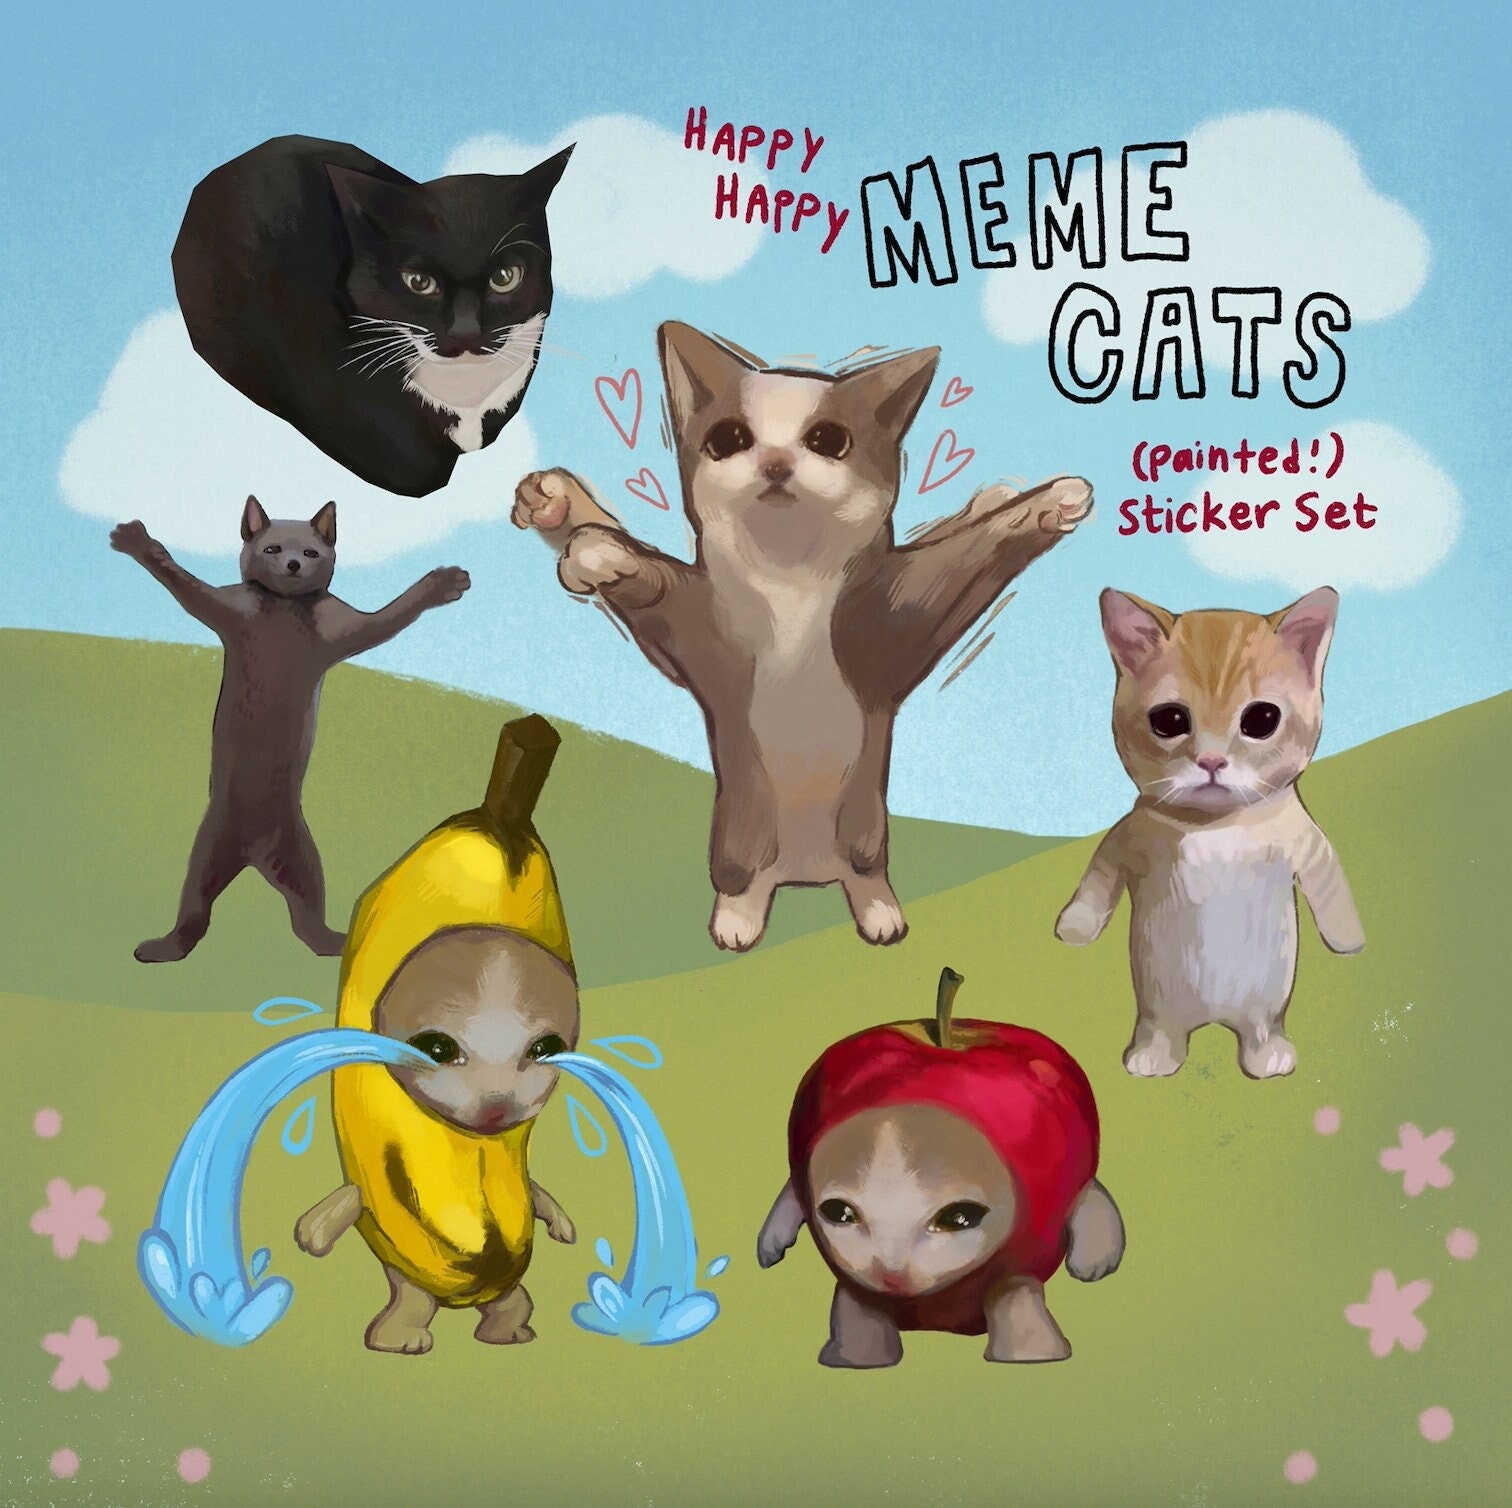 Sad Cat meme thumbs up with heart good job cat Sticker – Cat Meme Sticker,  sad cat meme, cat water bottle sticker, cat laptop vinyl stickers